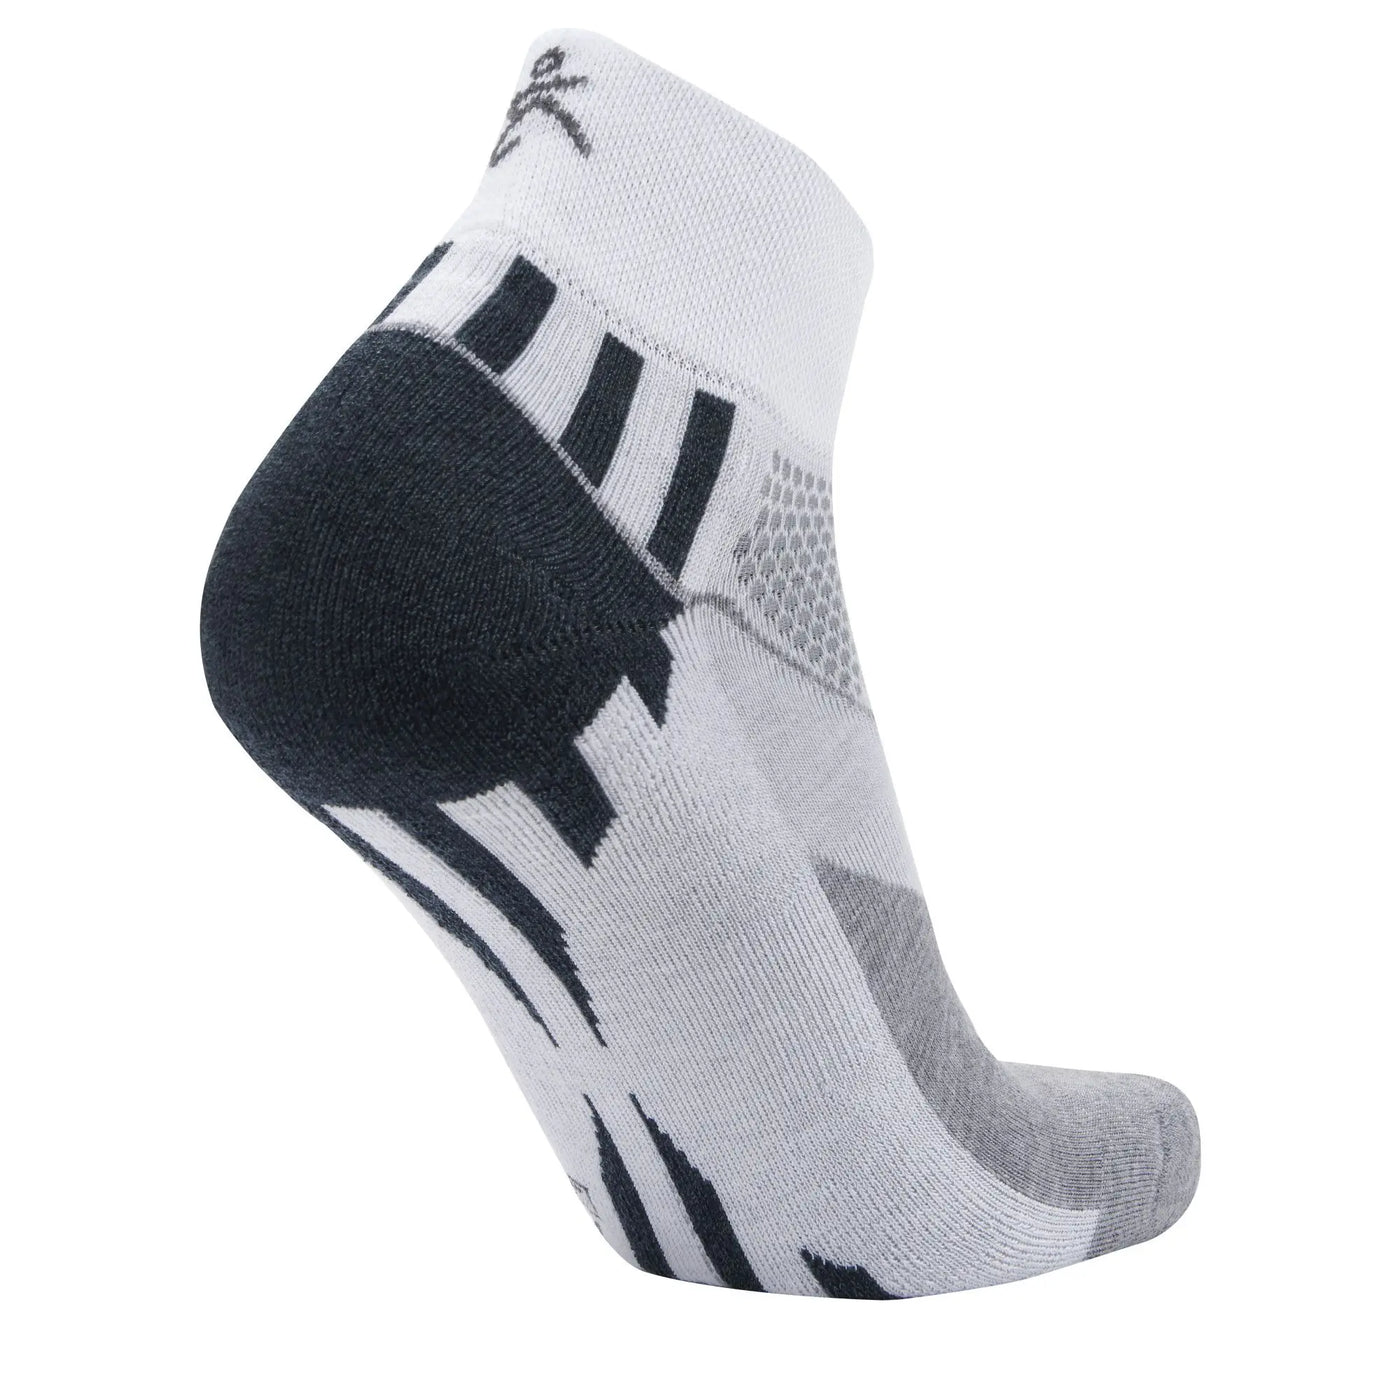 Balega Enduro Quarter Running Socks - BALE-8537-2332